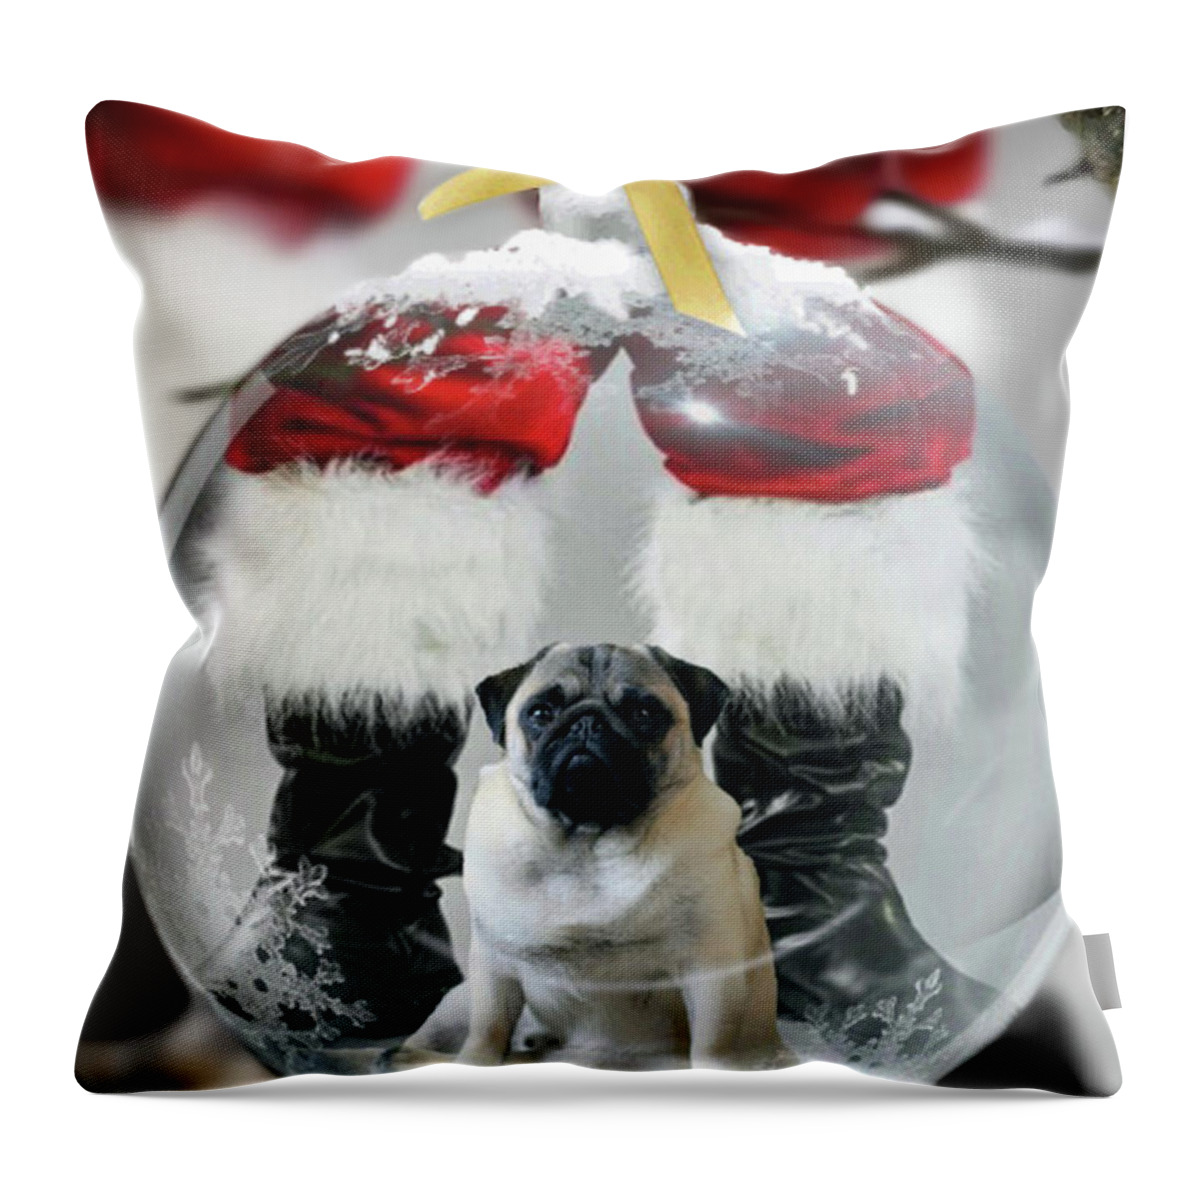 Pug Throw Pillow featuring the photograph Pug and Santa by Jackson Pearson